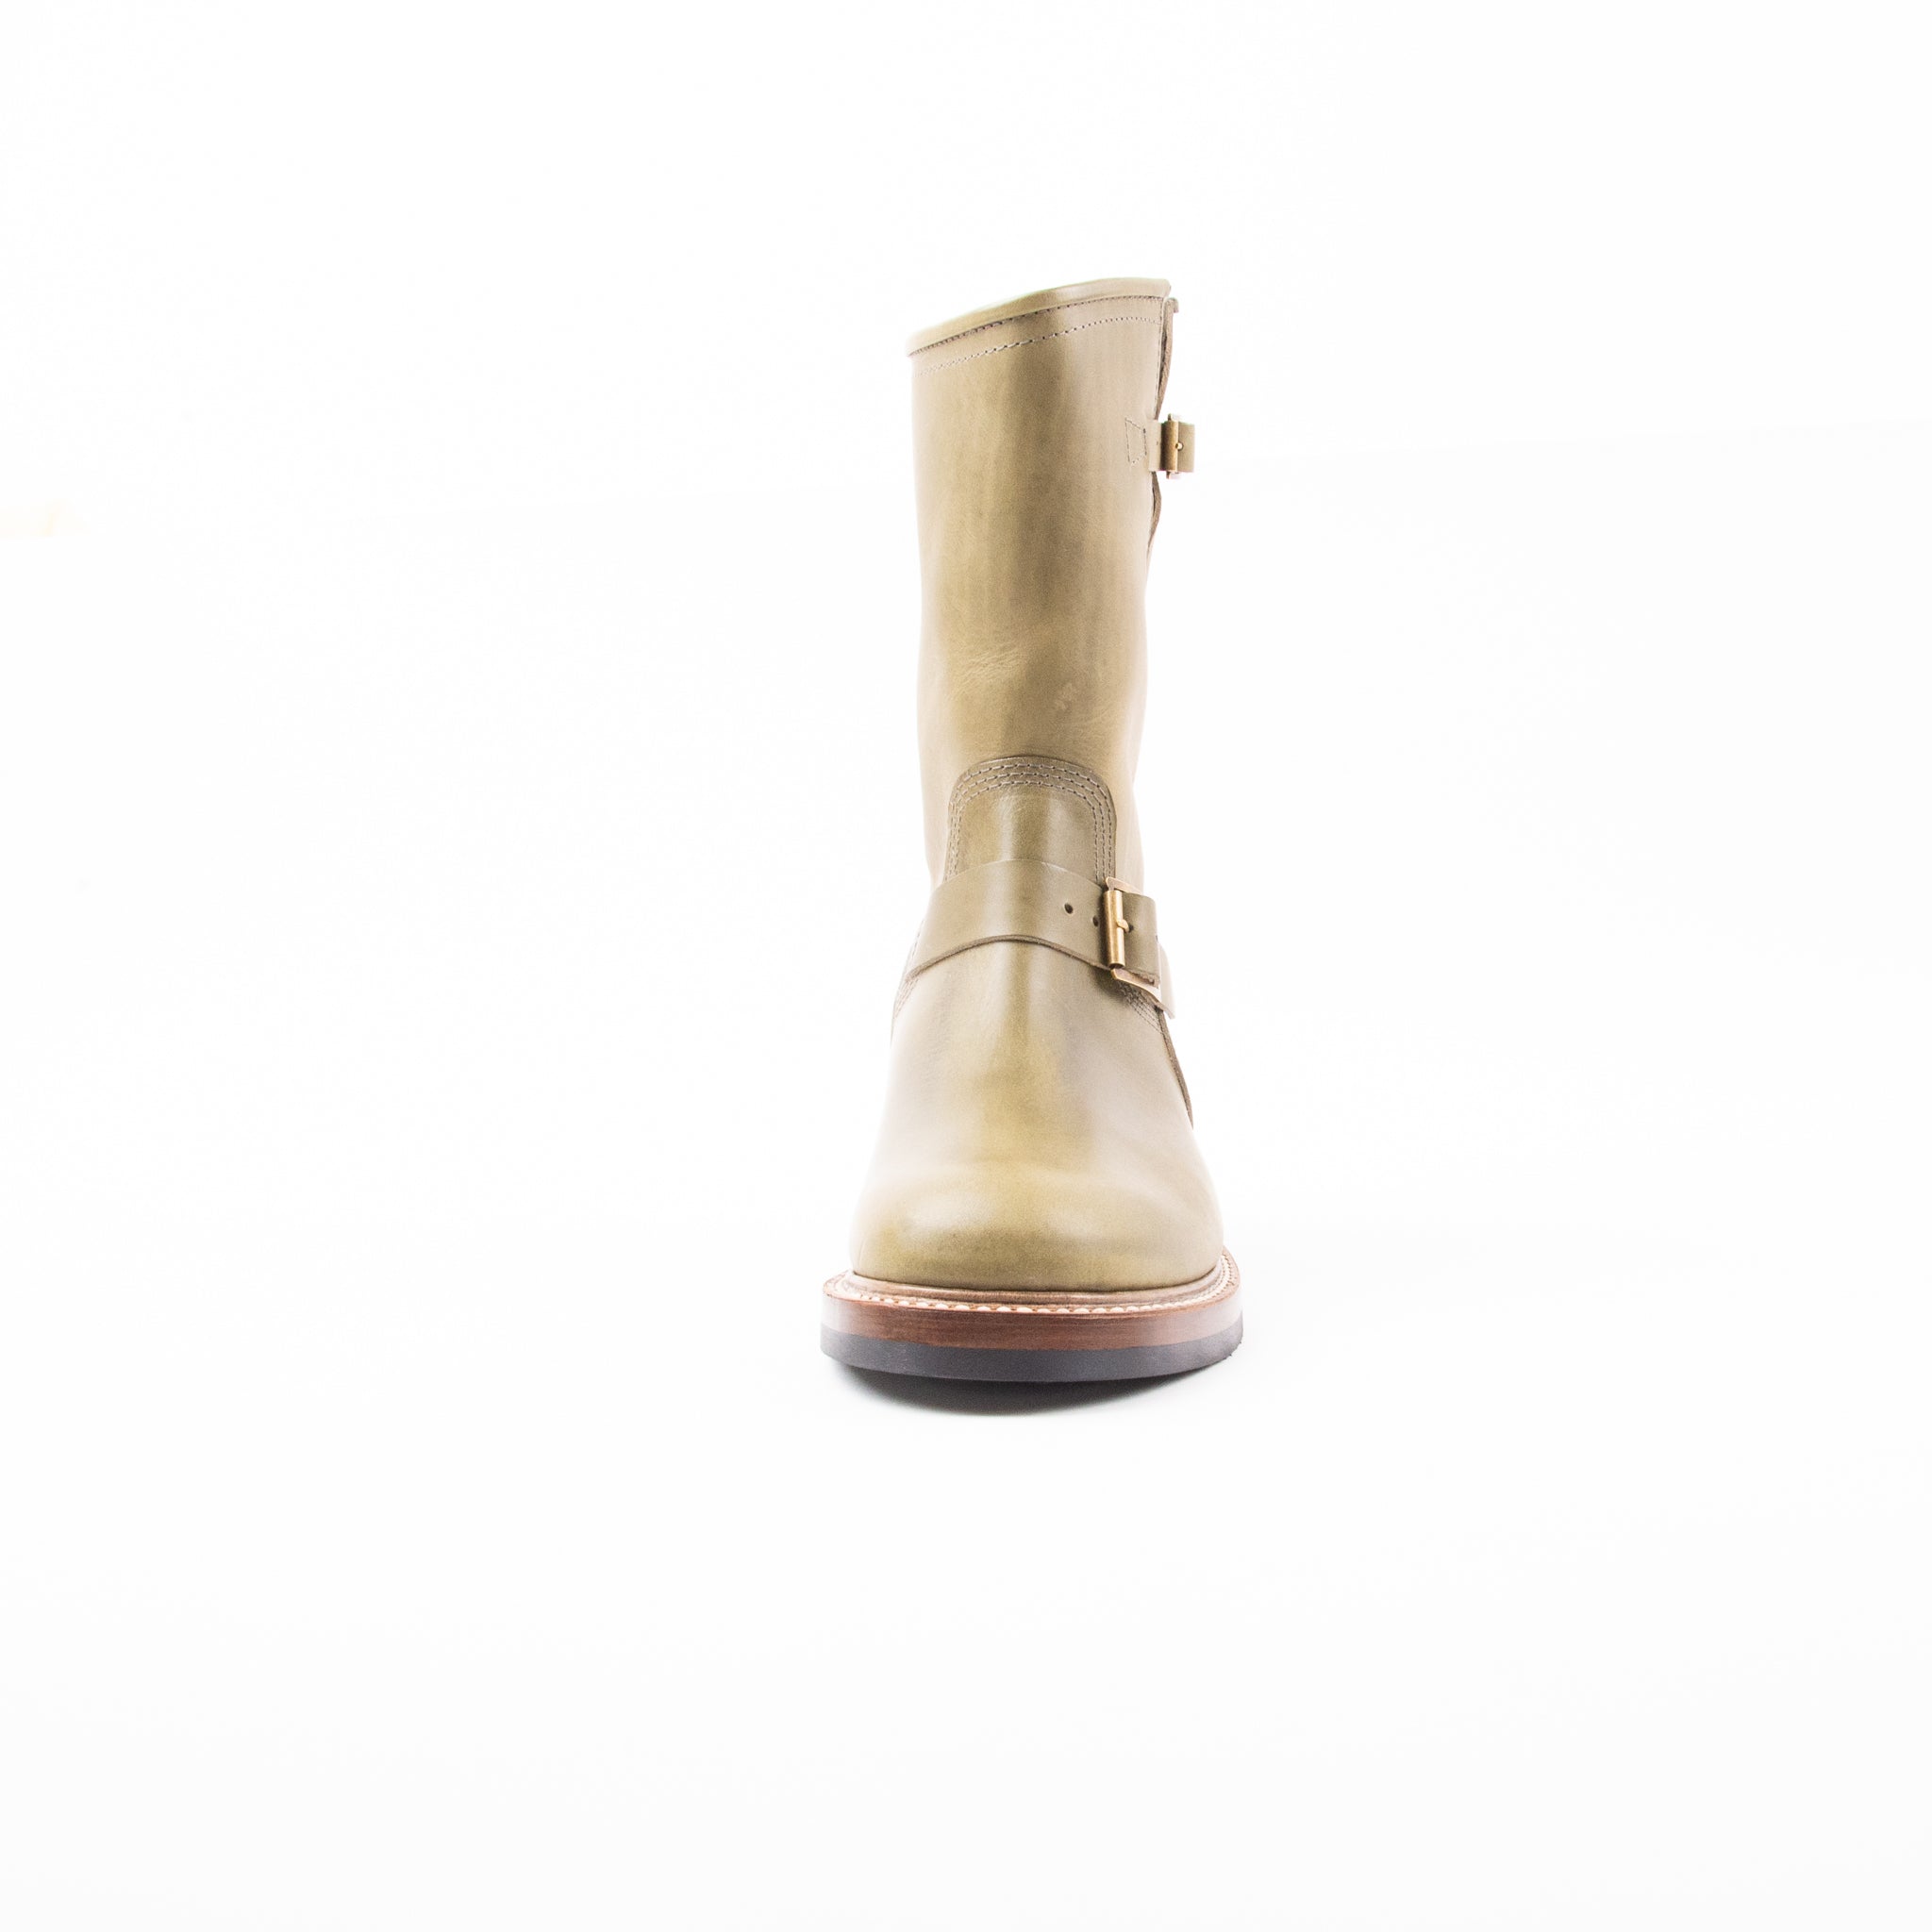 John Lofgren Wabash Engineer Boots<span> Badalassi Carlo Leather Grigio</span>